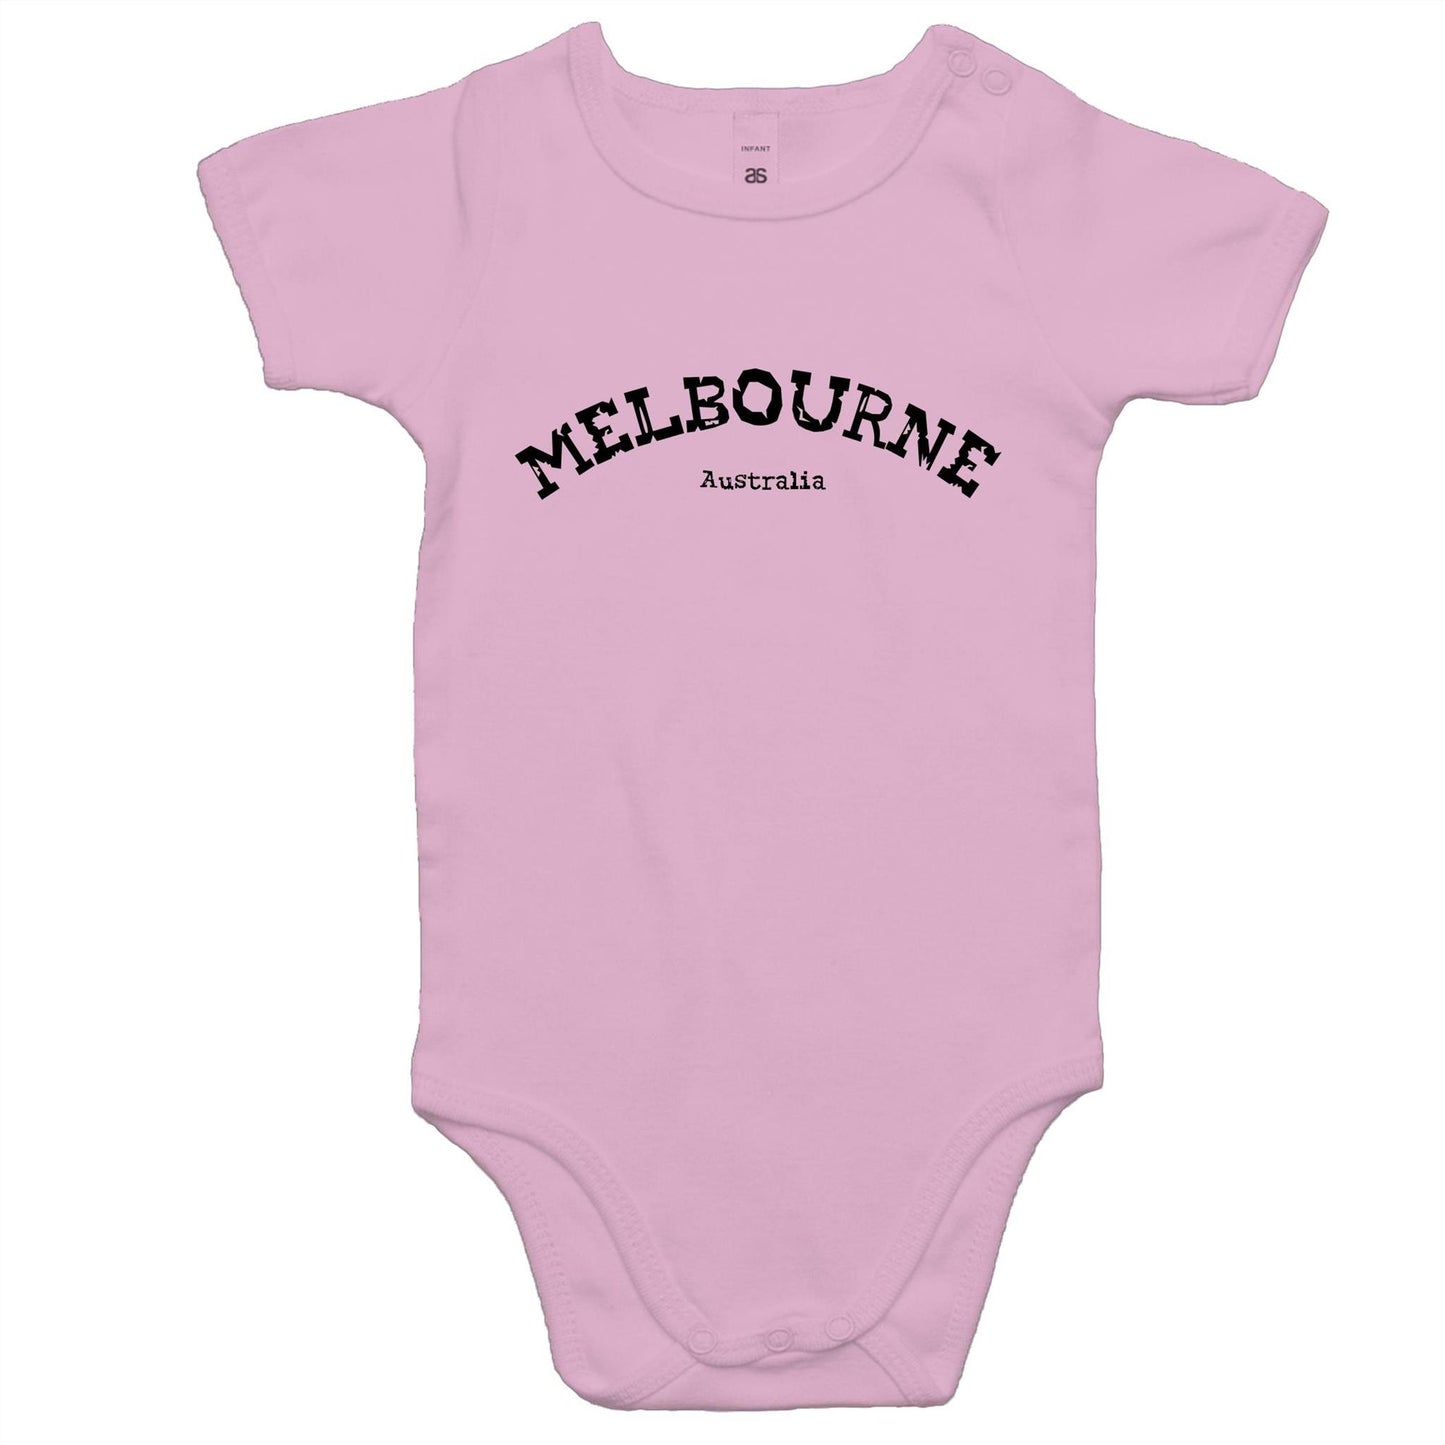 MELBOURNE AS Colour Mini Me - Baby Onesie Romper